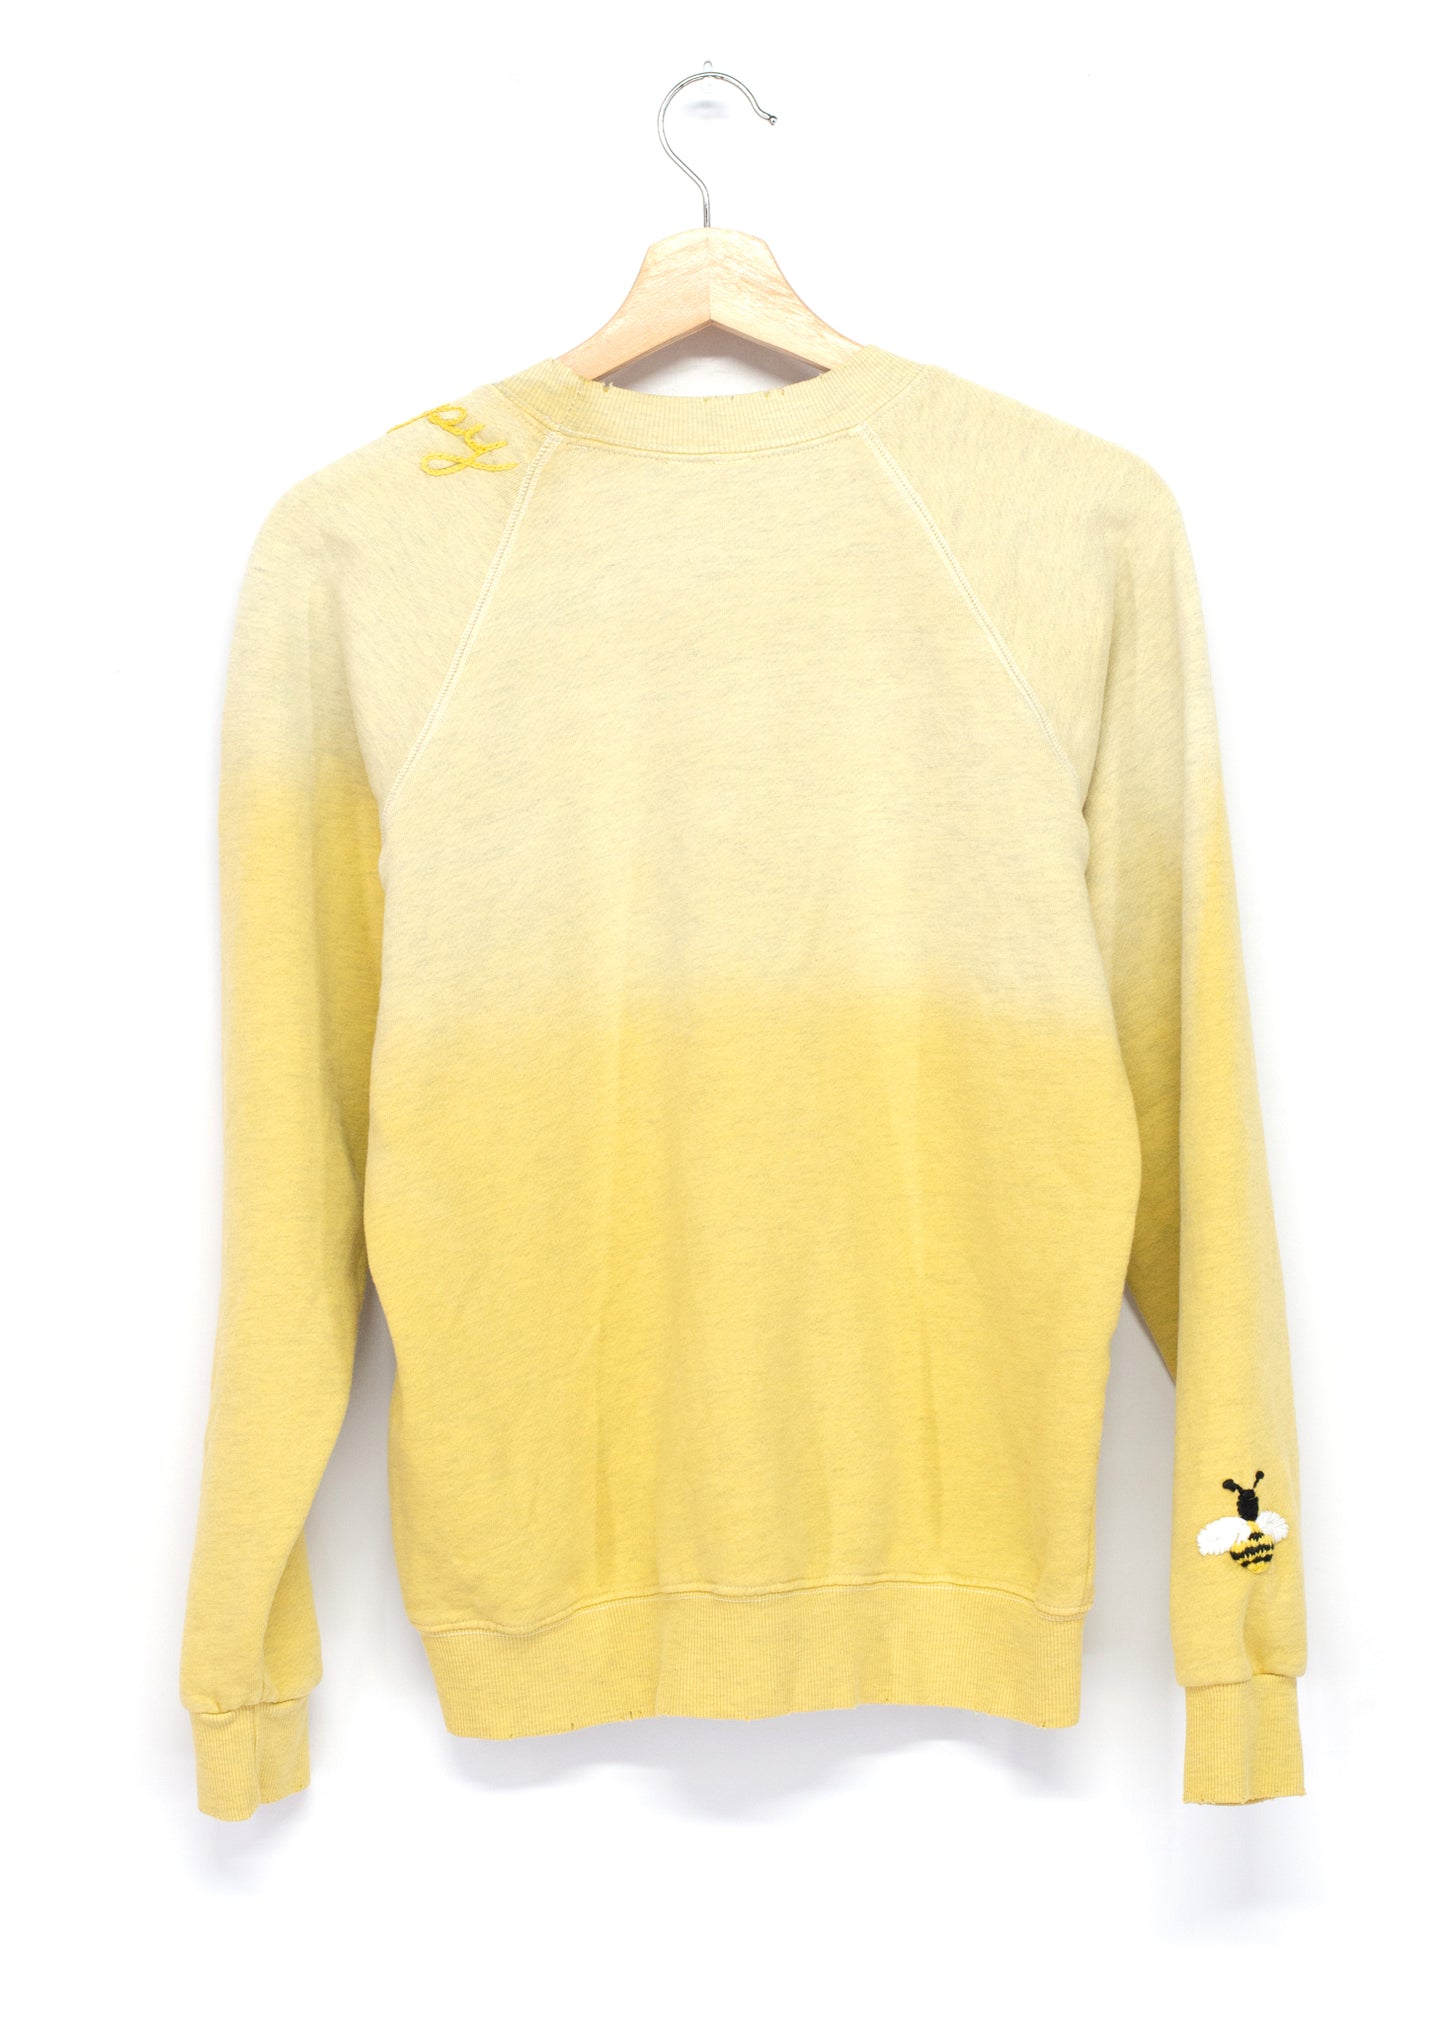 Bee Happy Embroidery Sweatshirt(2 Colors)